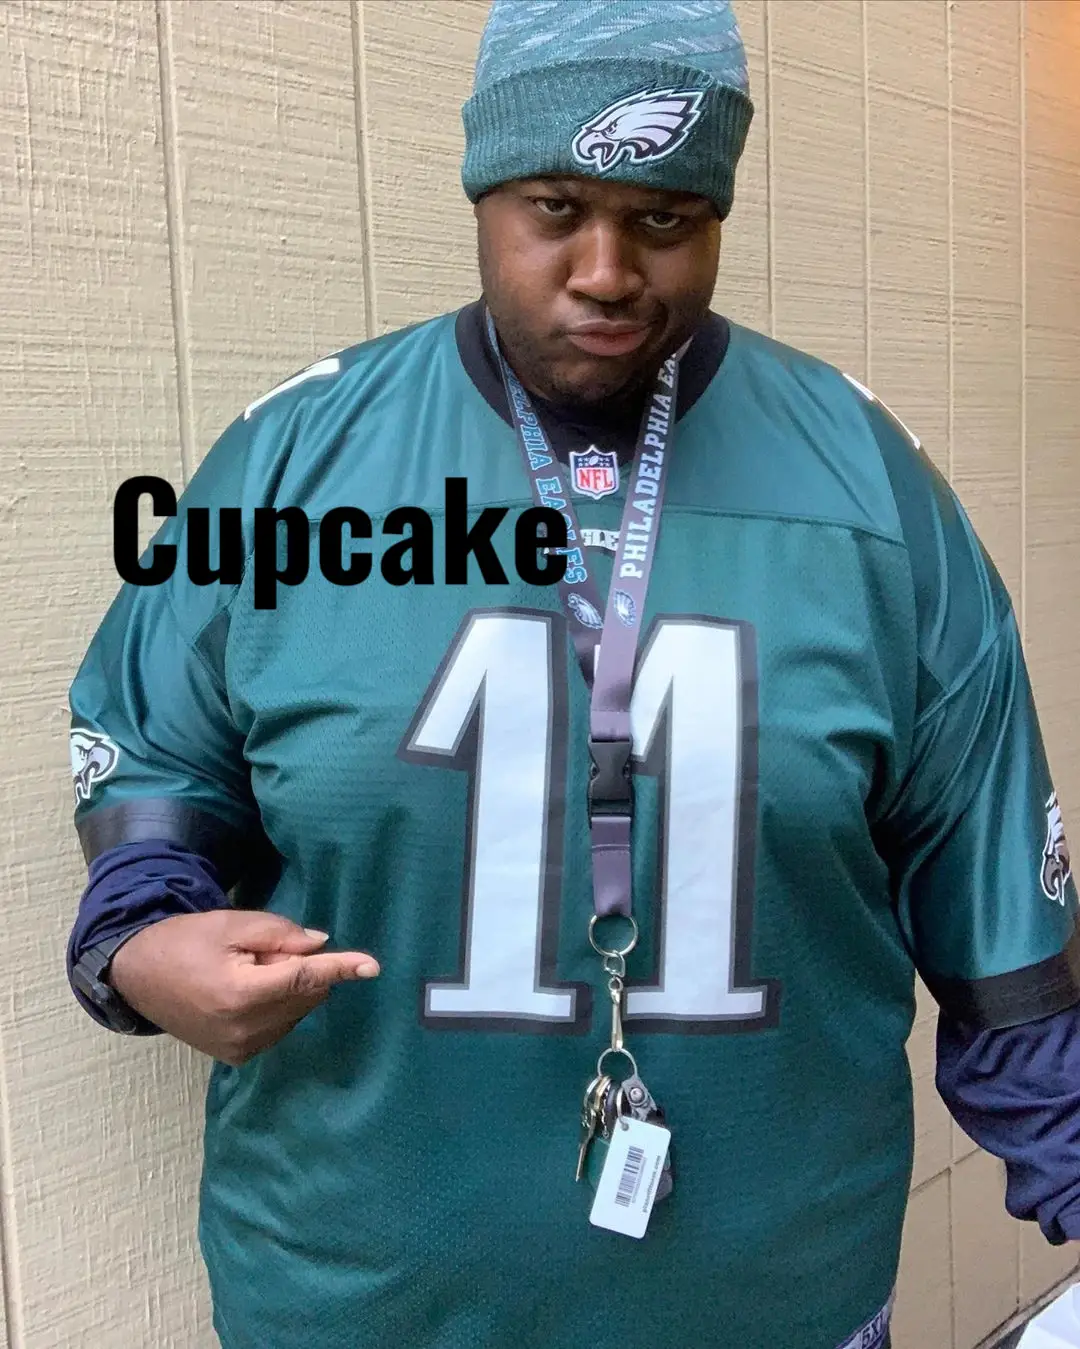 EDP445 Gets His Cupcake 